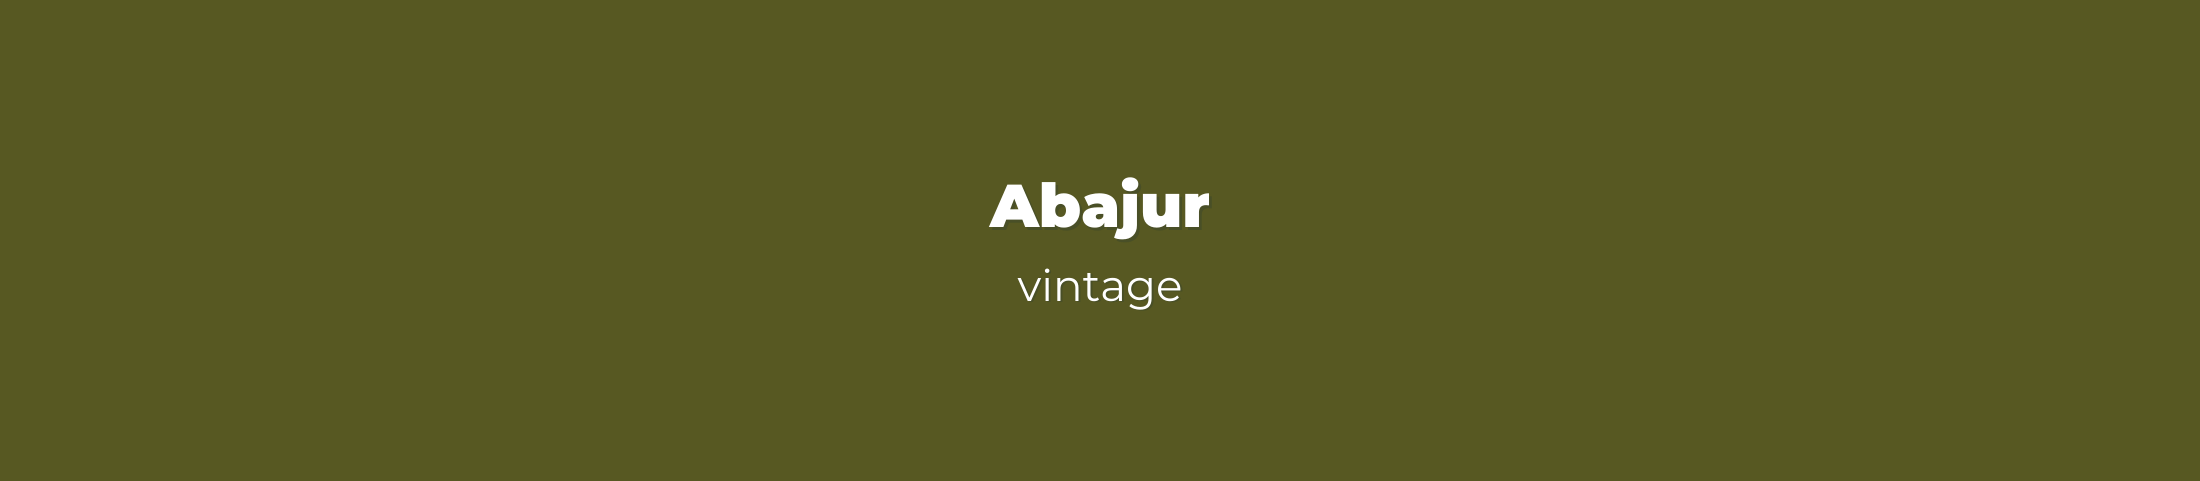 abajur vintage veentx